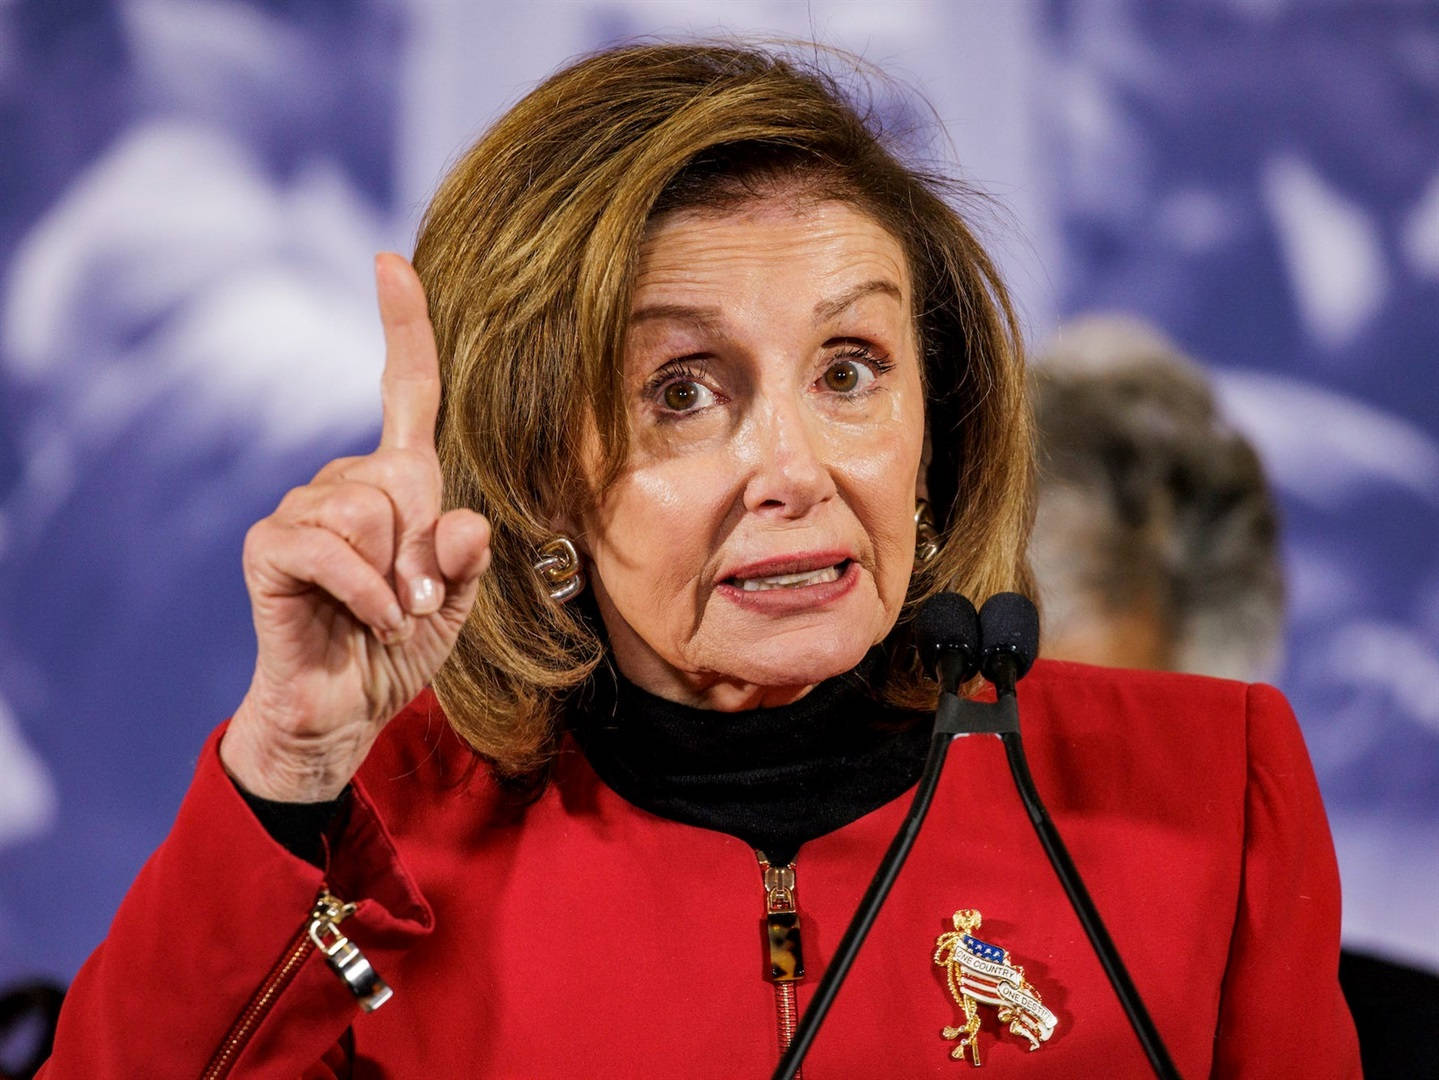 Caption: U.S. Speaker of the House, Nancy Pelosi, gesturing upward during a public event Wallpaper